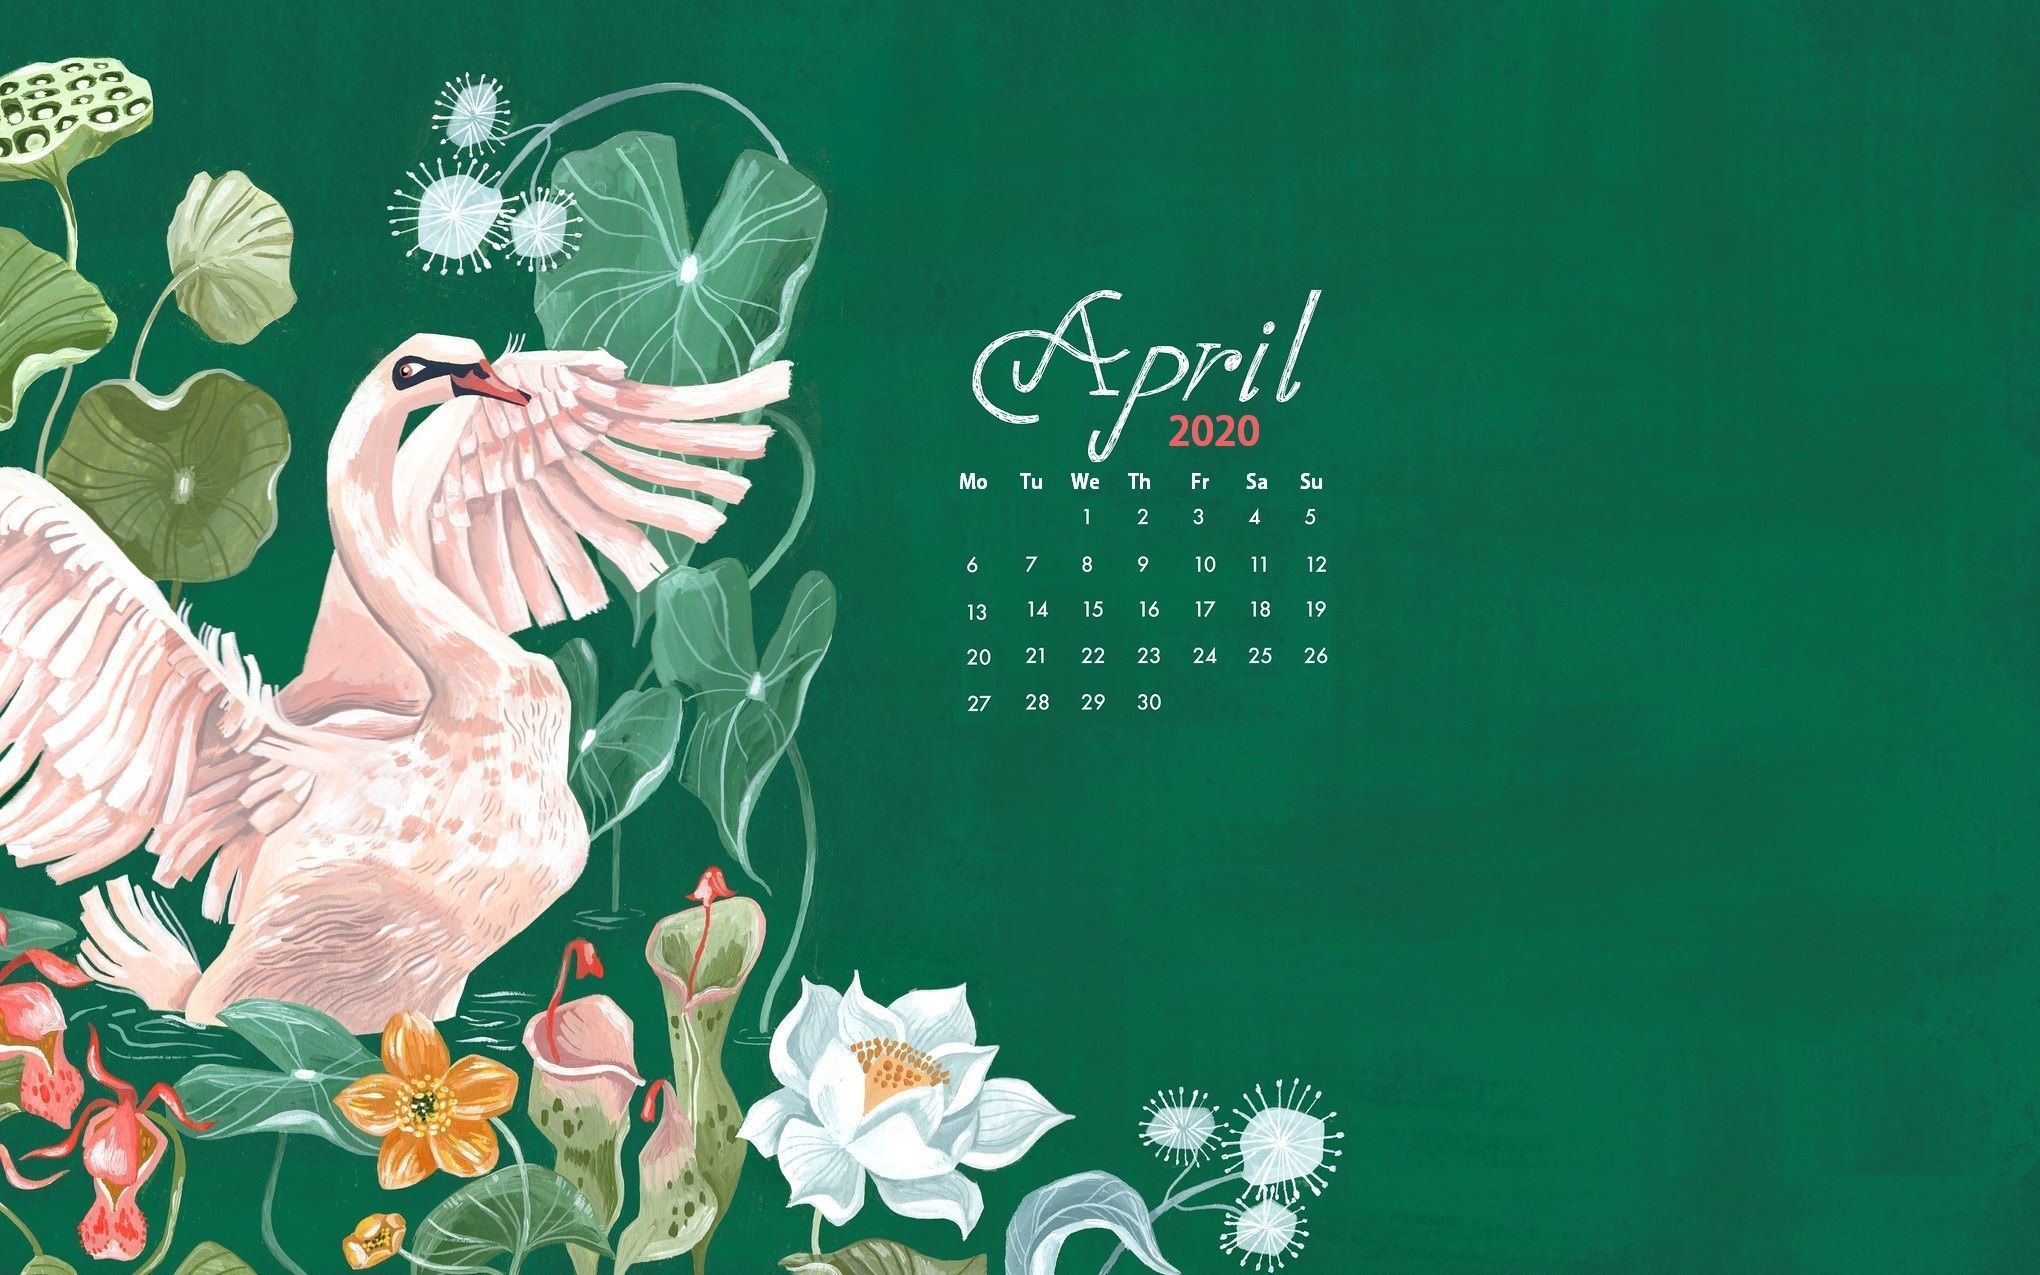 April 2020 Wallpaper Calendar. Calendar wallpaper